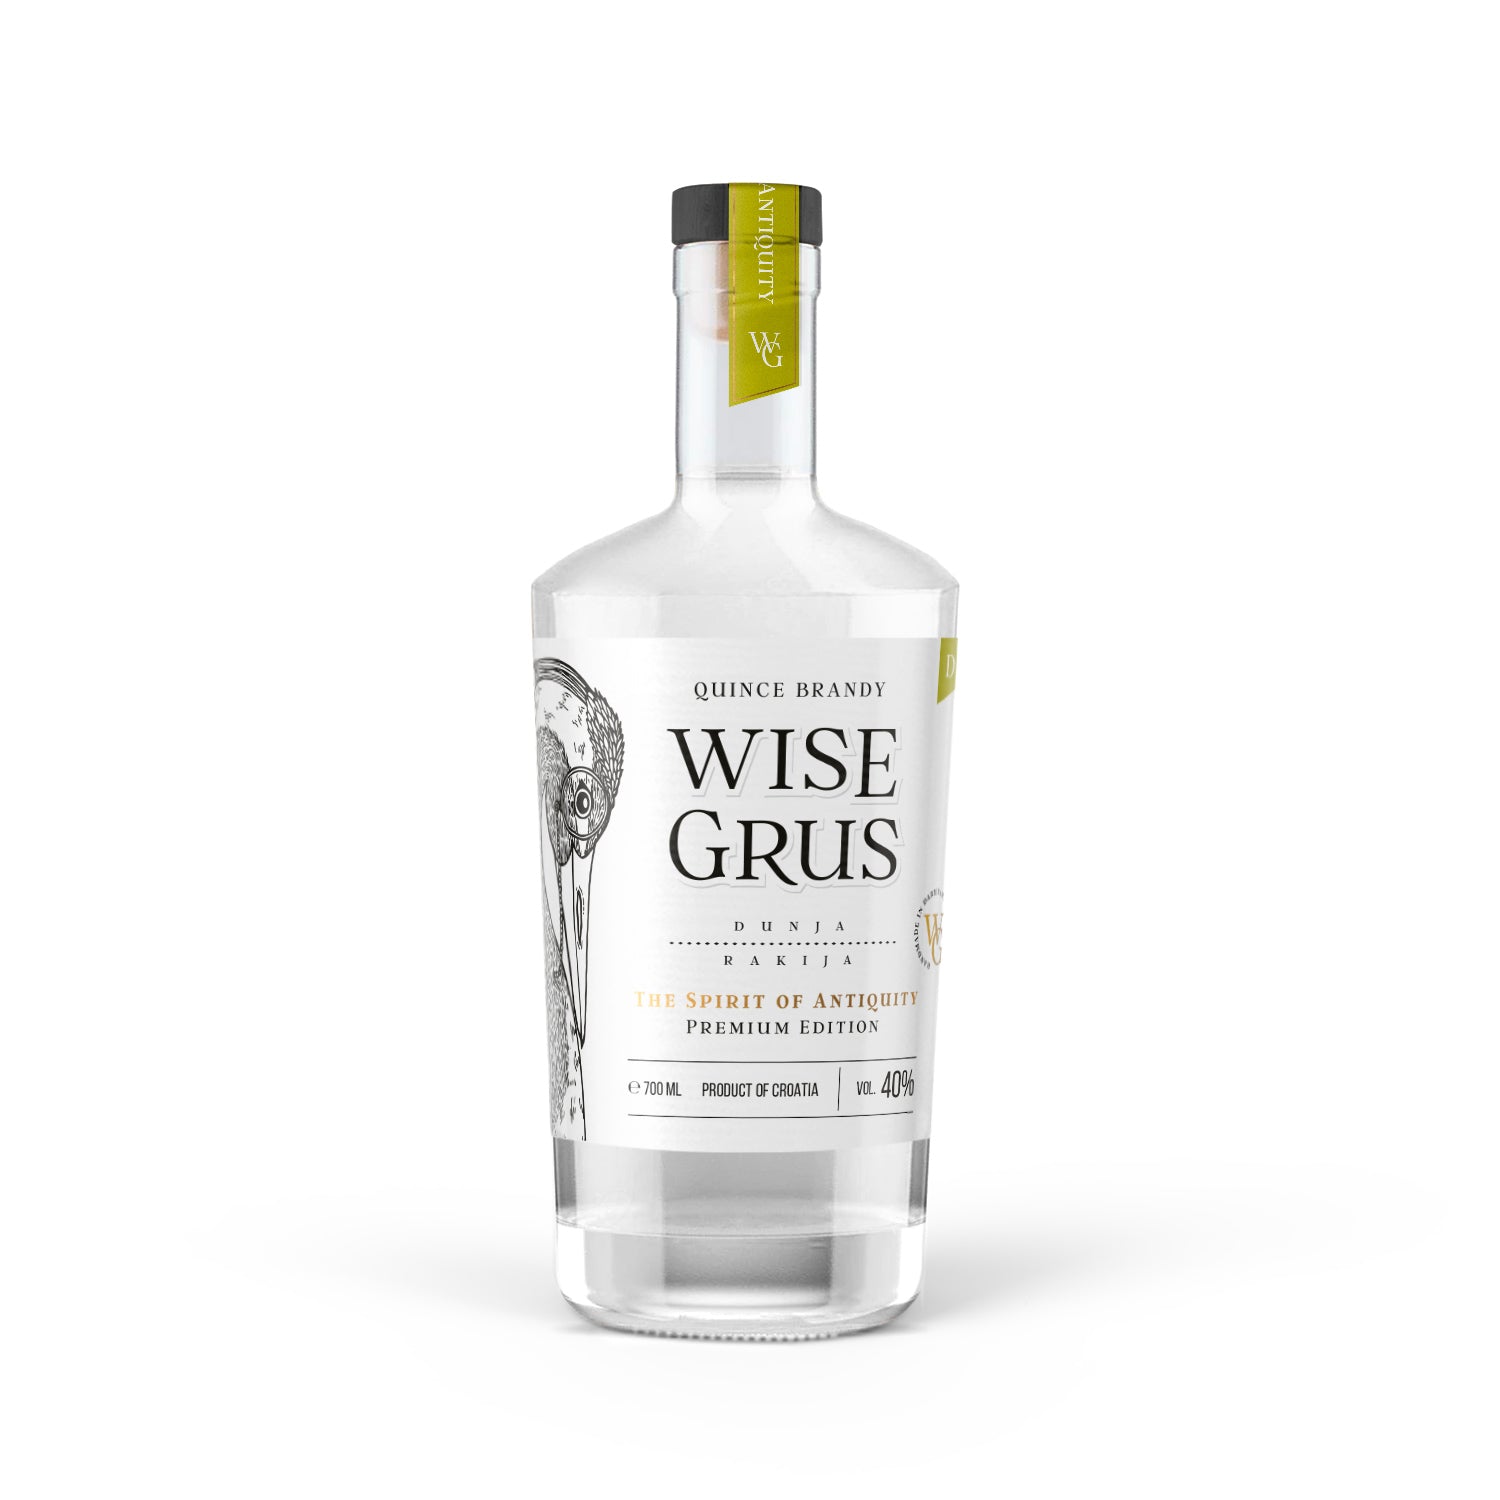 Wise Grus Quince Brandy Dunja Rakija Premium Edition 40% Vol. 0,7l